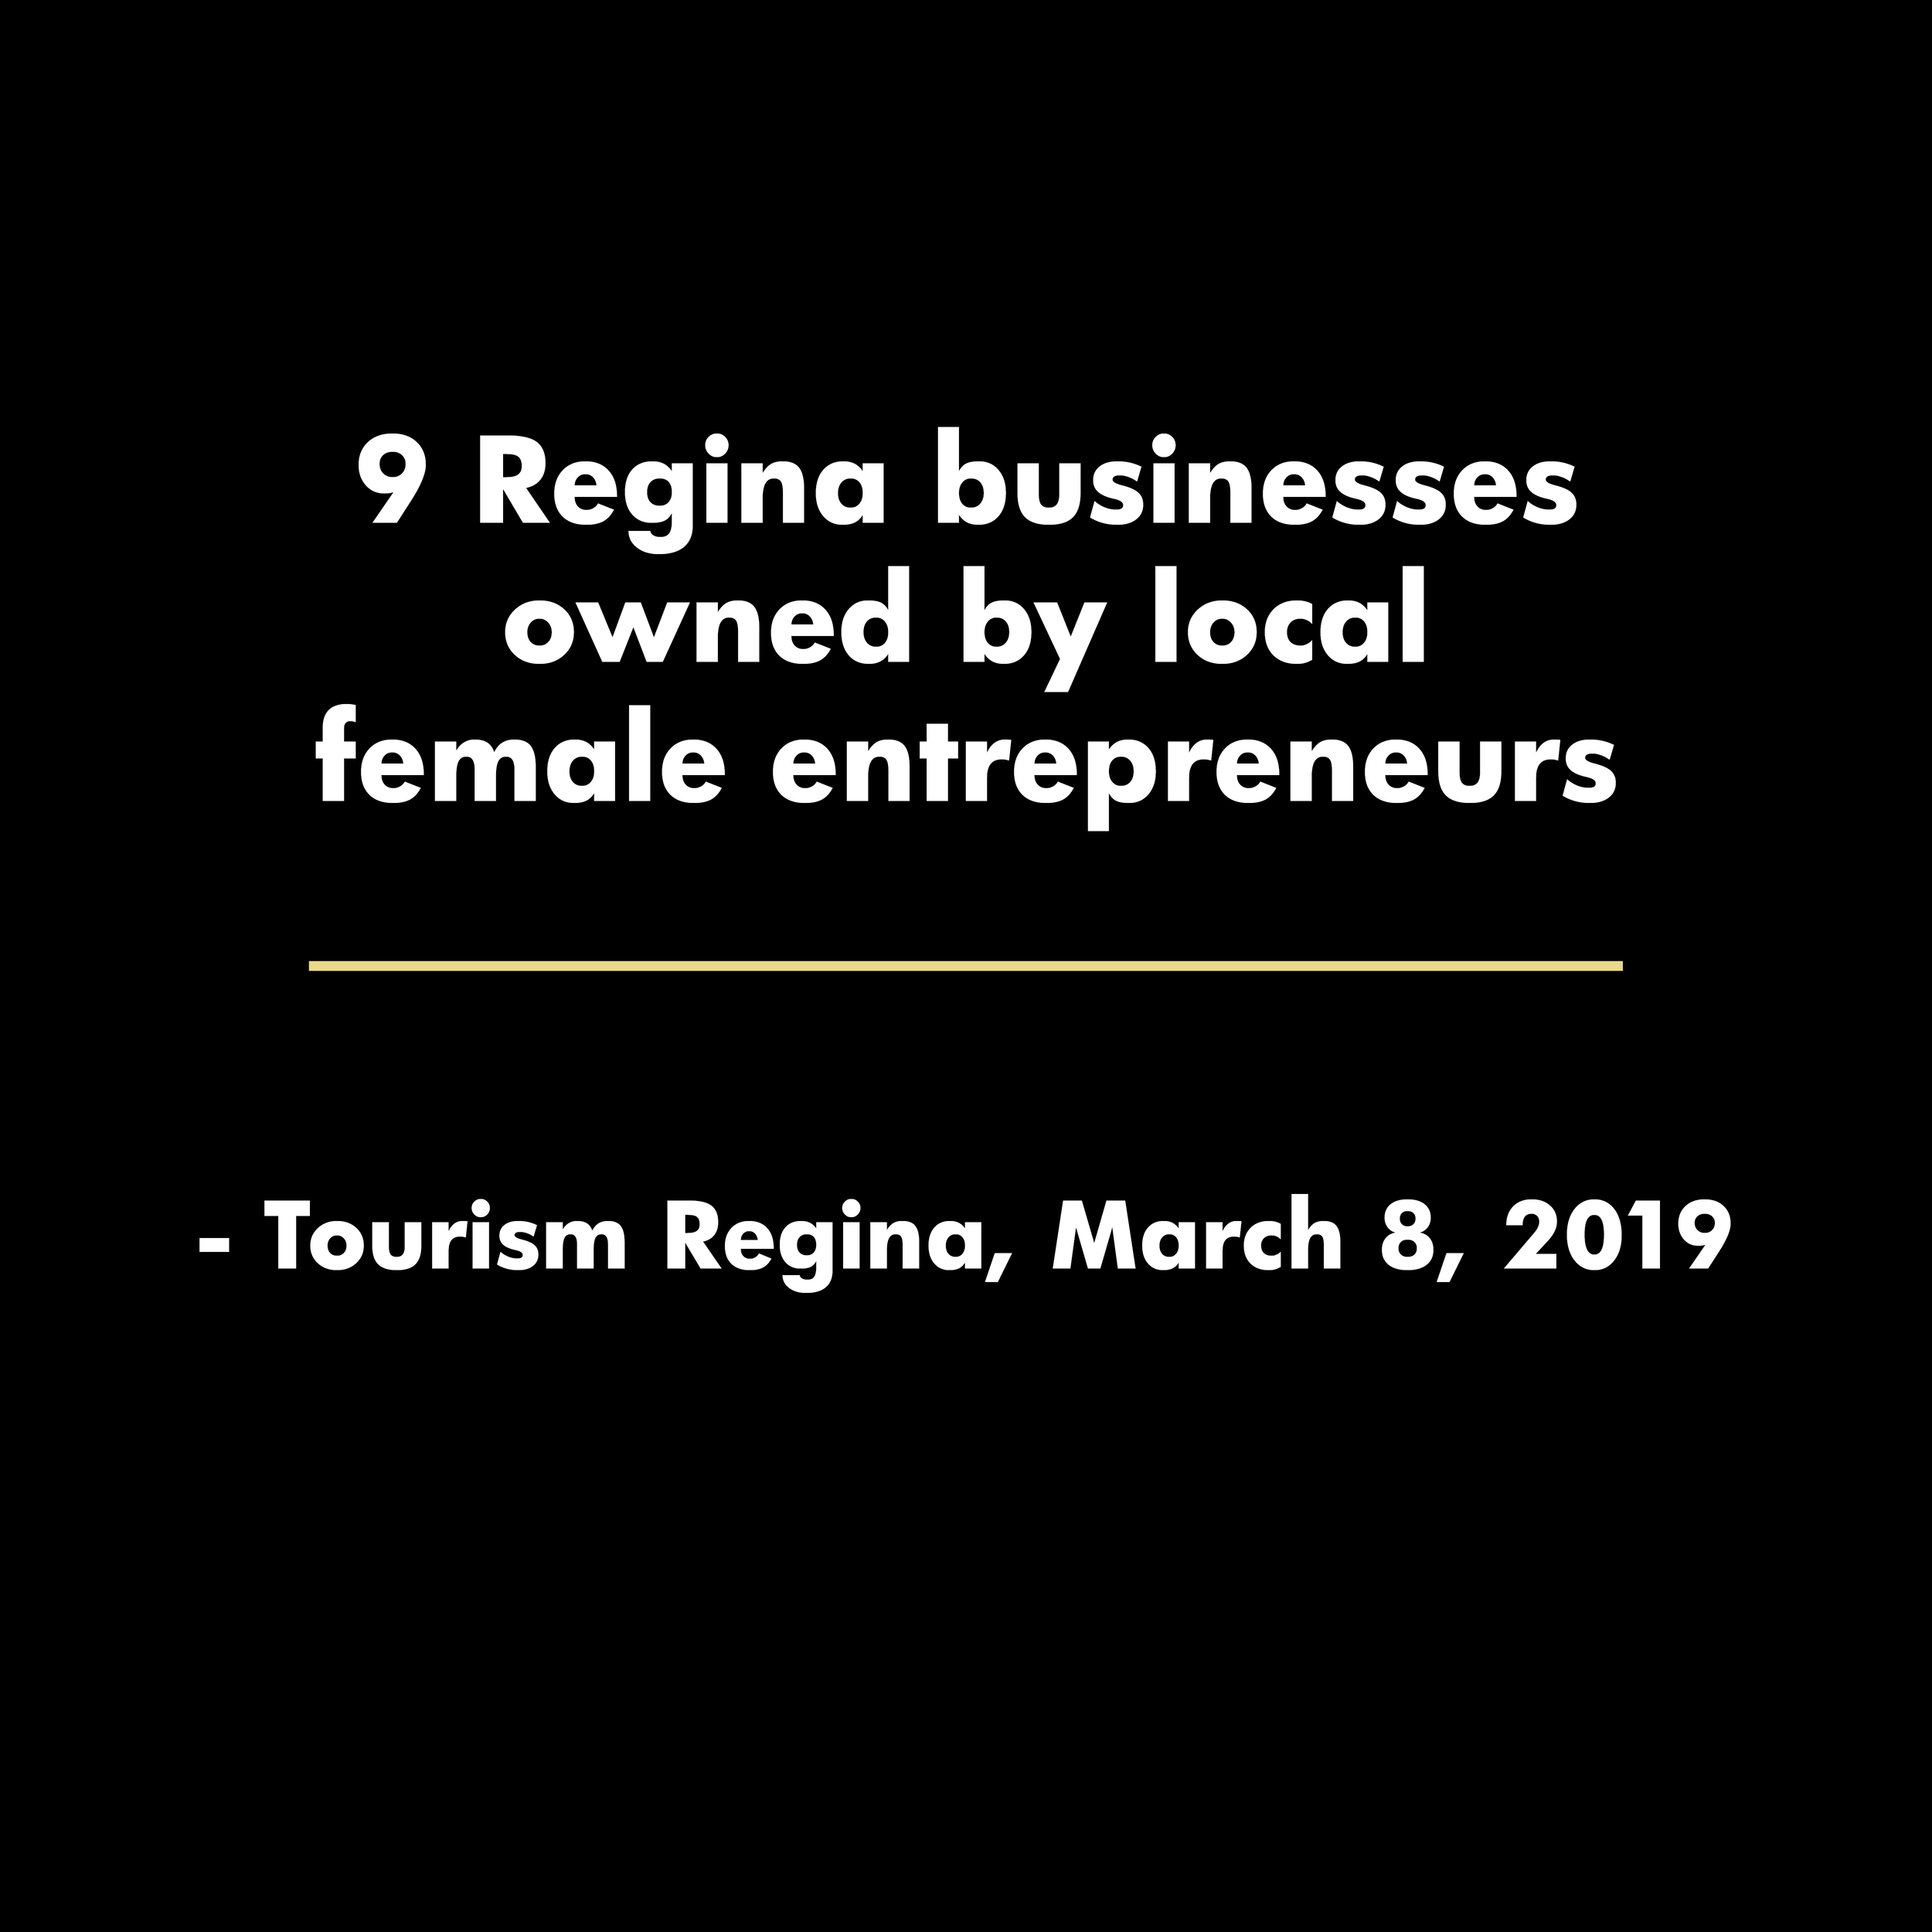  Local Female Entrepreneurs